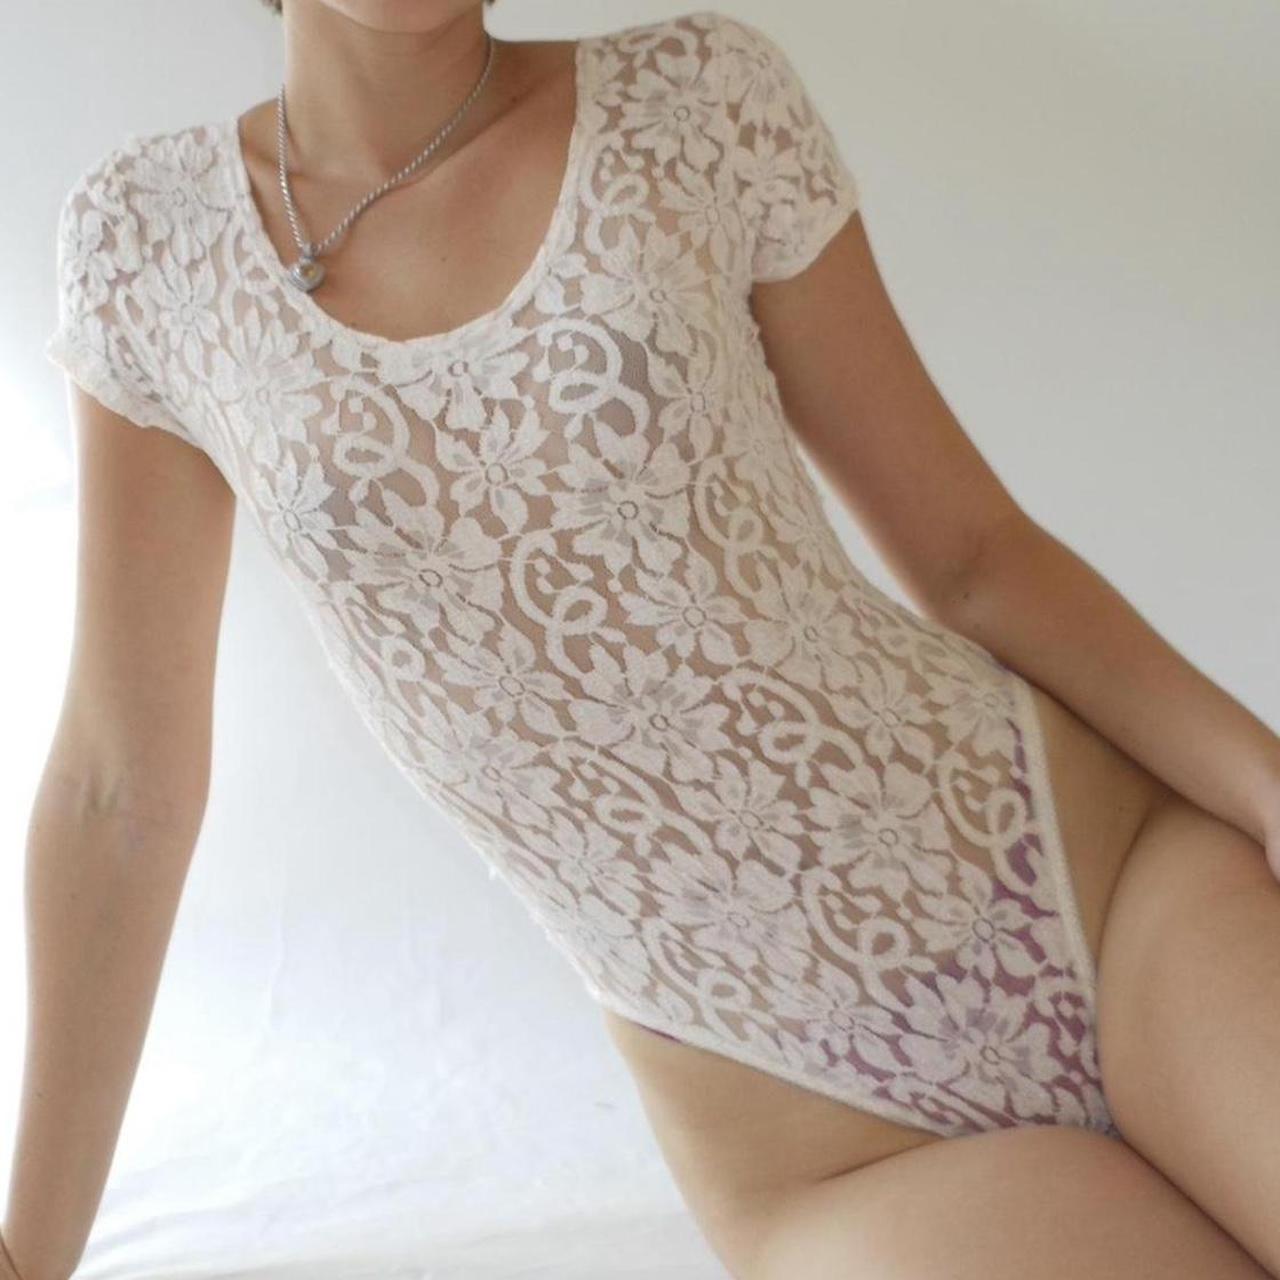 cream lace 90s bodysuit 🤍 in great condition, super - Depop